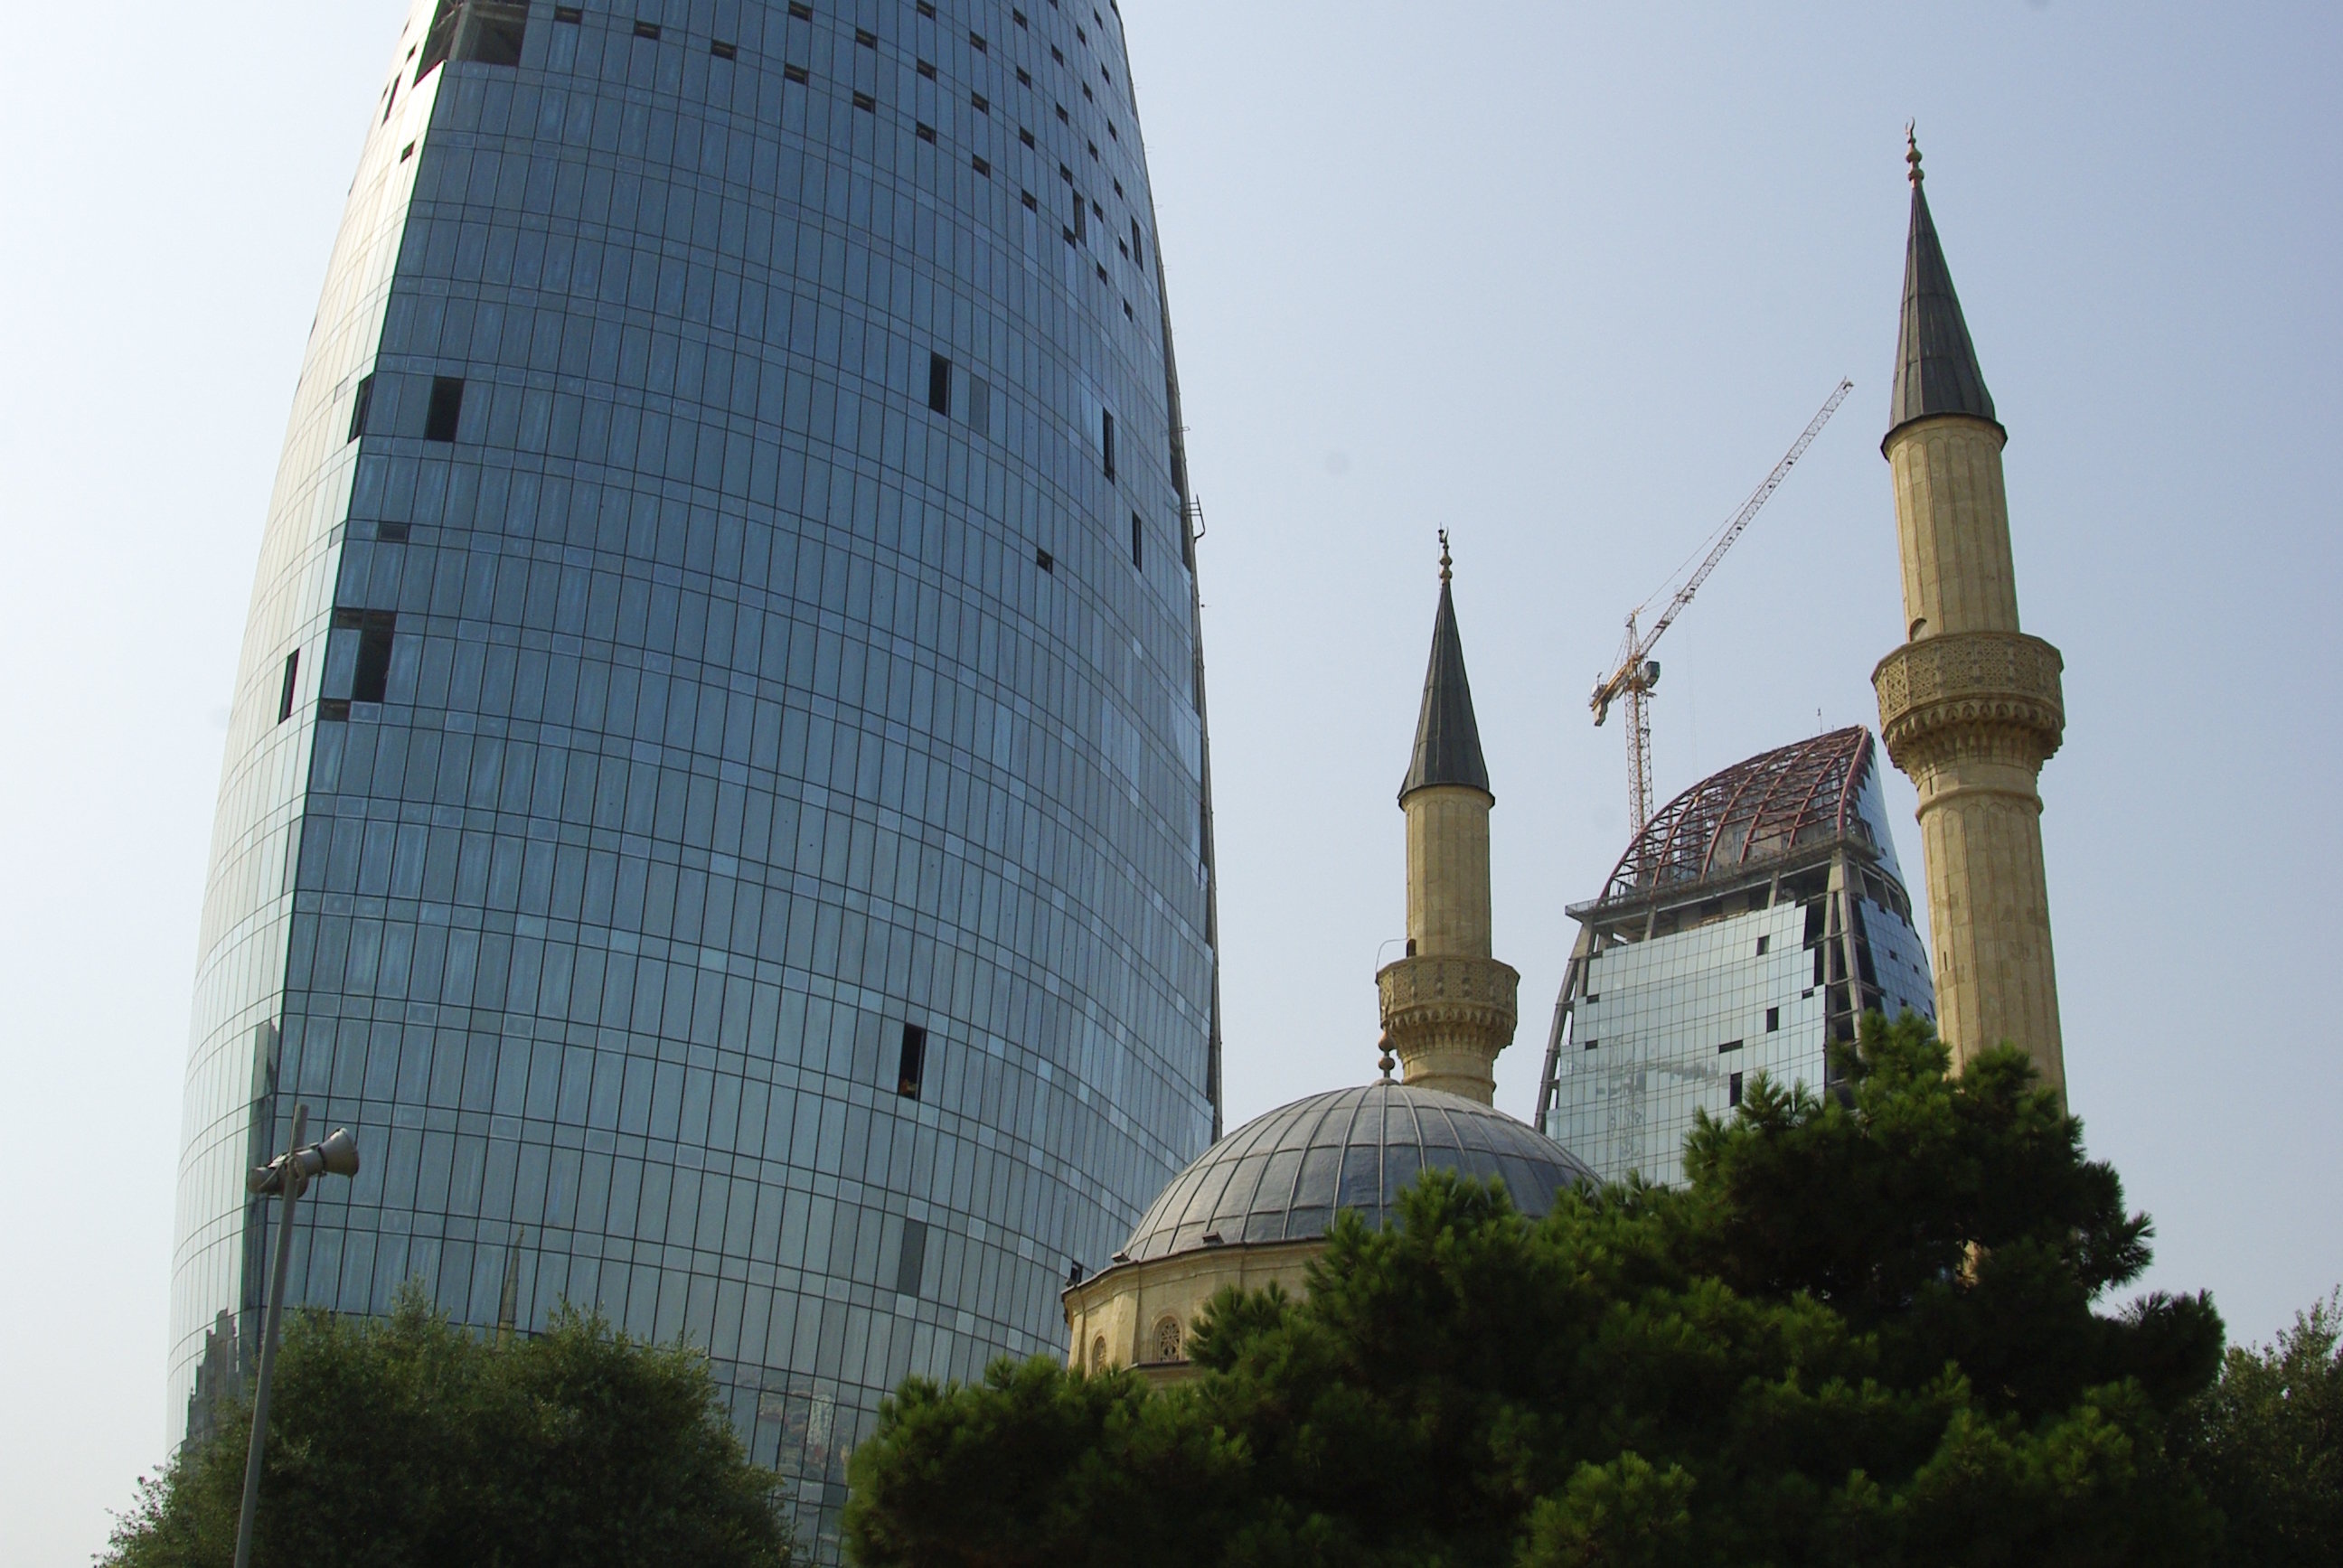 Azerbaijan: Flame Towers, A reference to Azerbaijan's nickname "The Land of Fire". 2600x1740 HD Wallpaper.